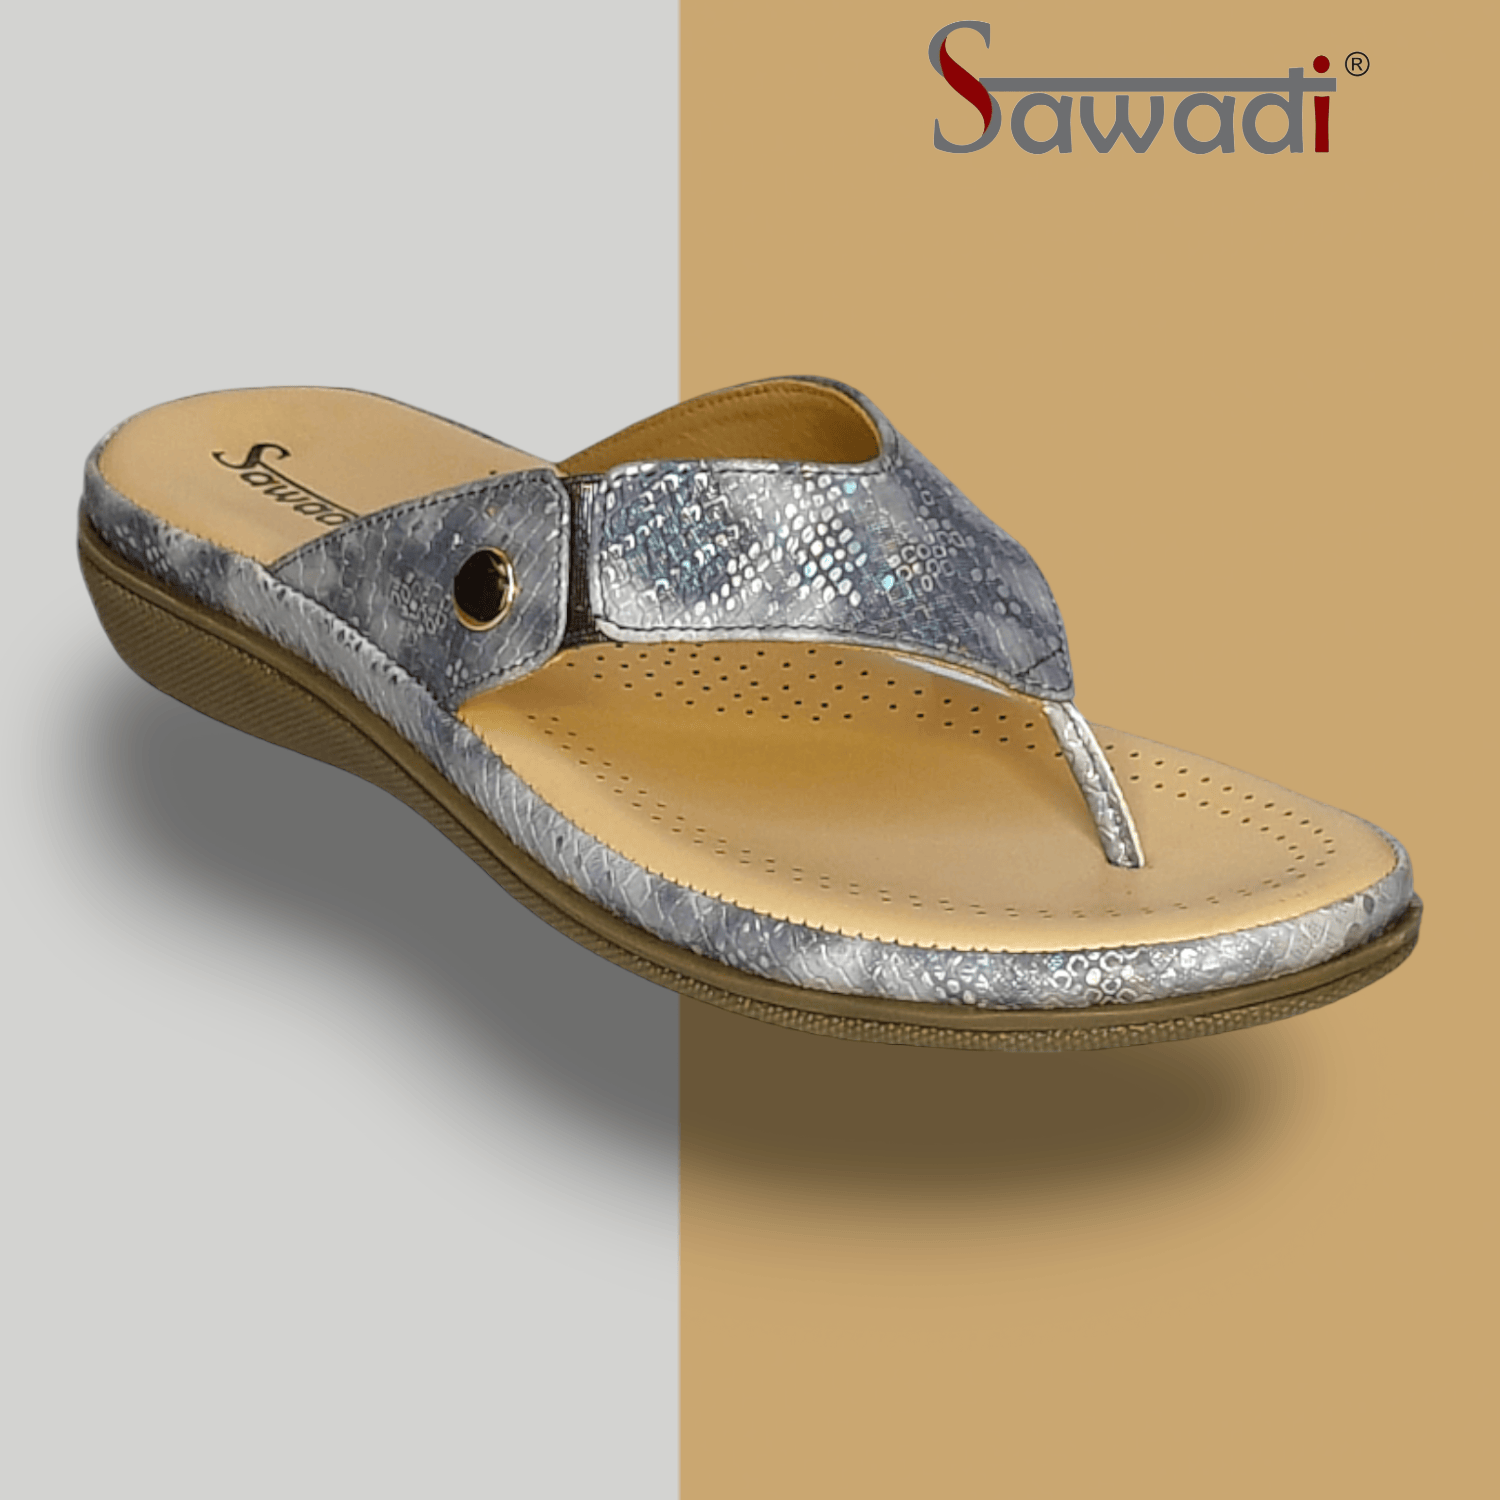 Sawadi Women Heel chappals casuals